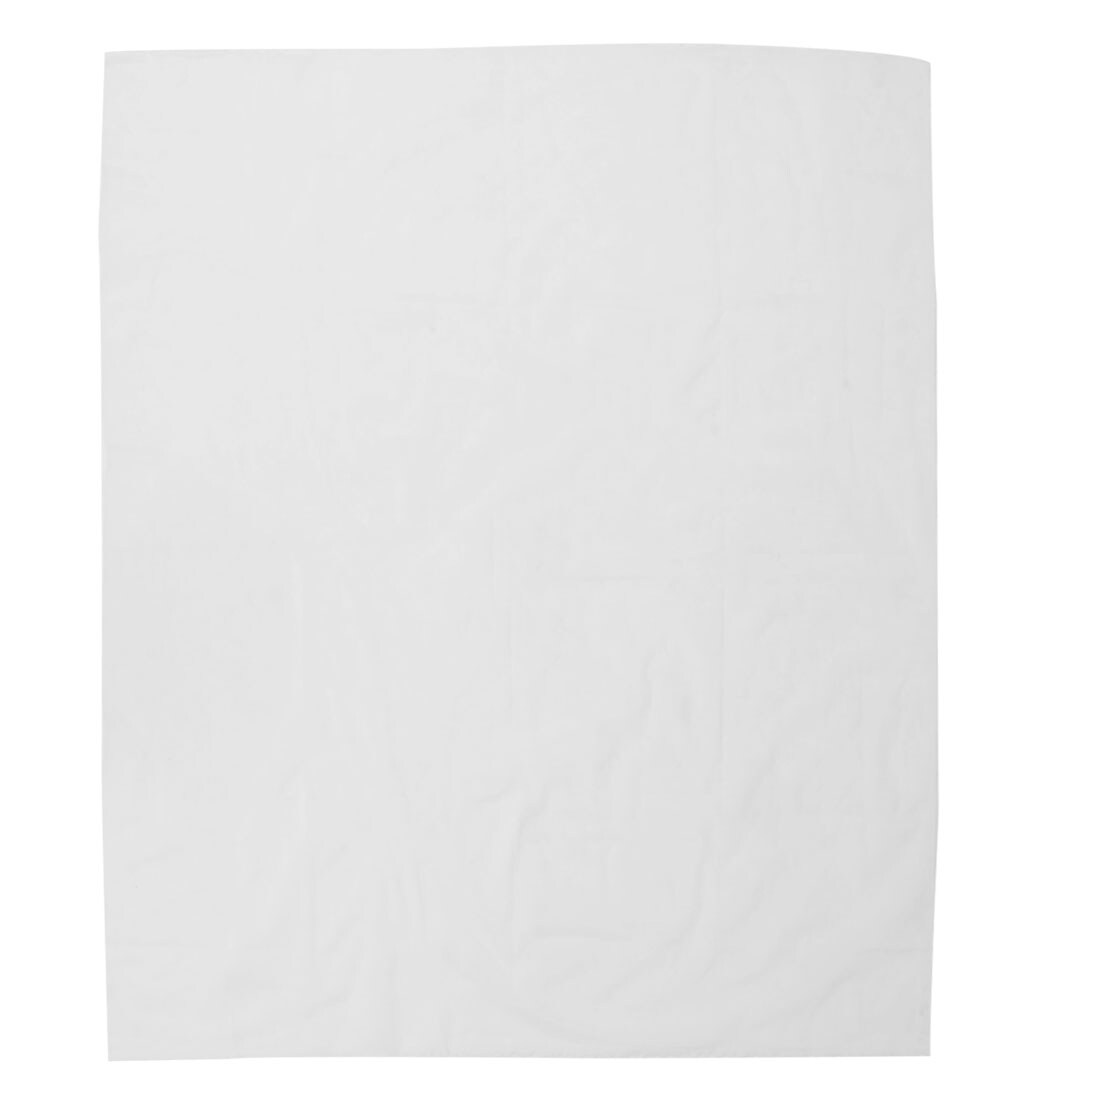 Soya Bean Strainer Cloth Flour Processing Nylon Filter 39.4" x 39.4" White